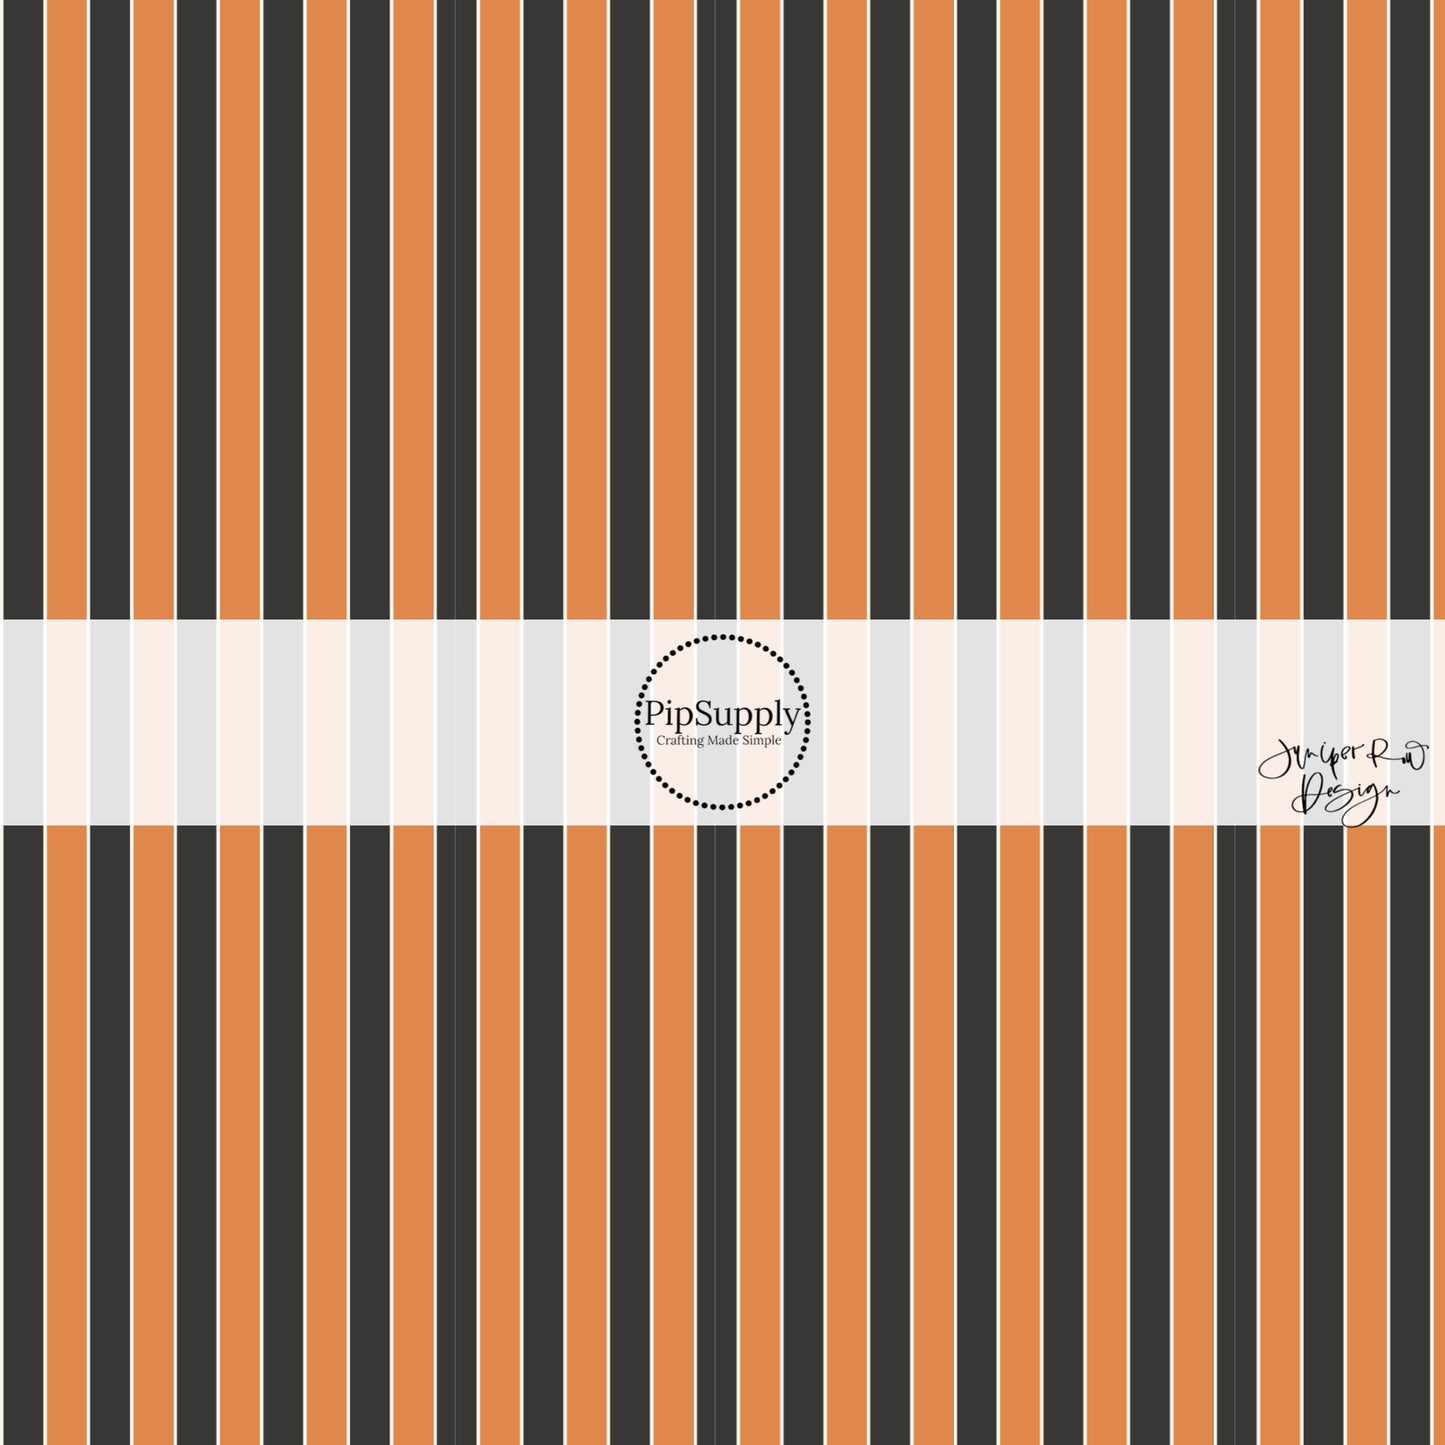 Thin white lines on black and orange stripes hair bow strips